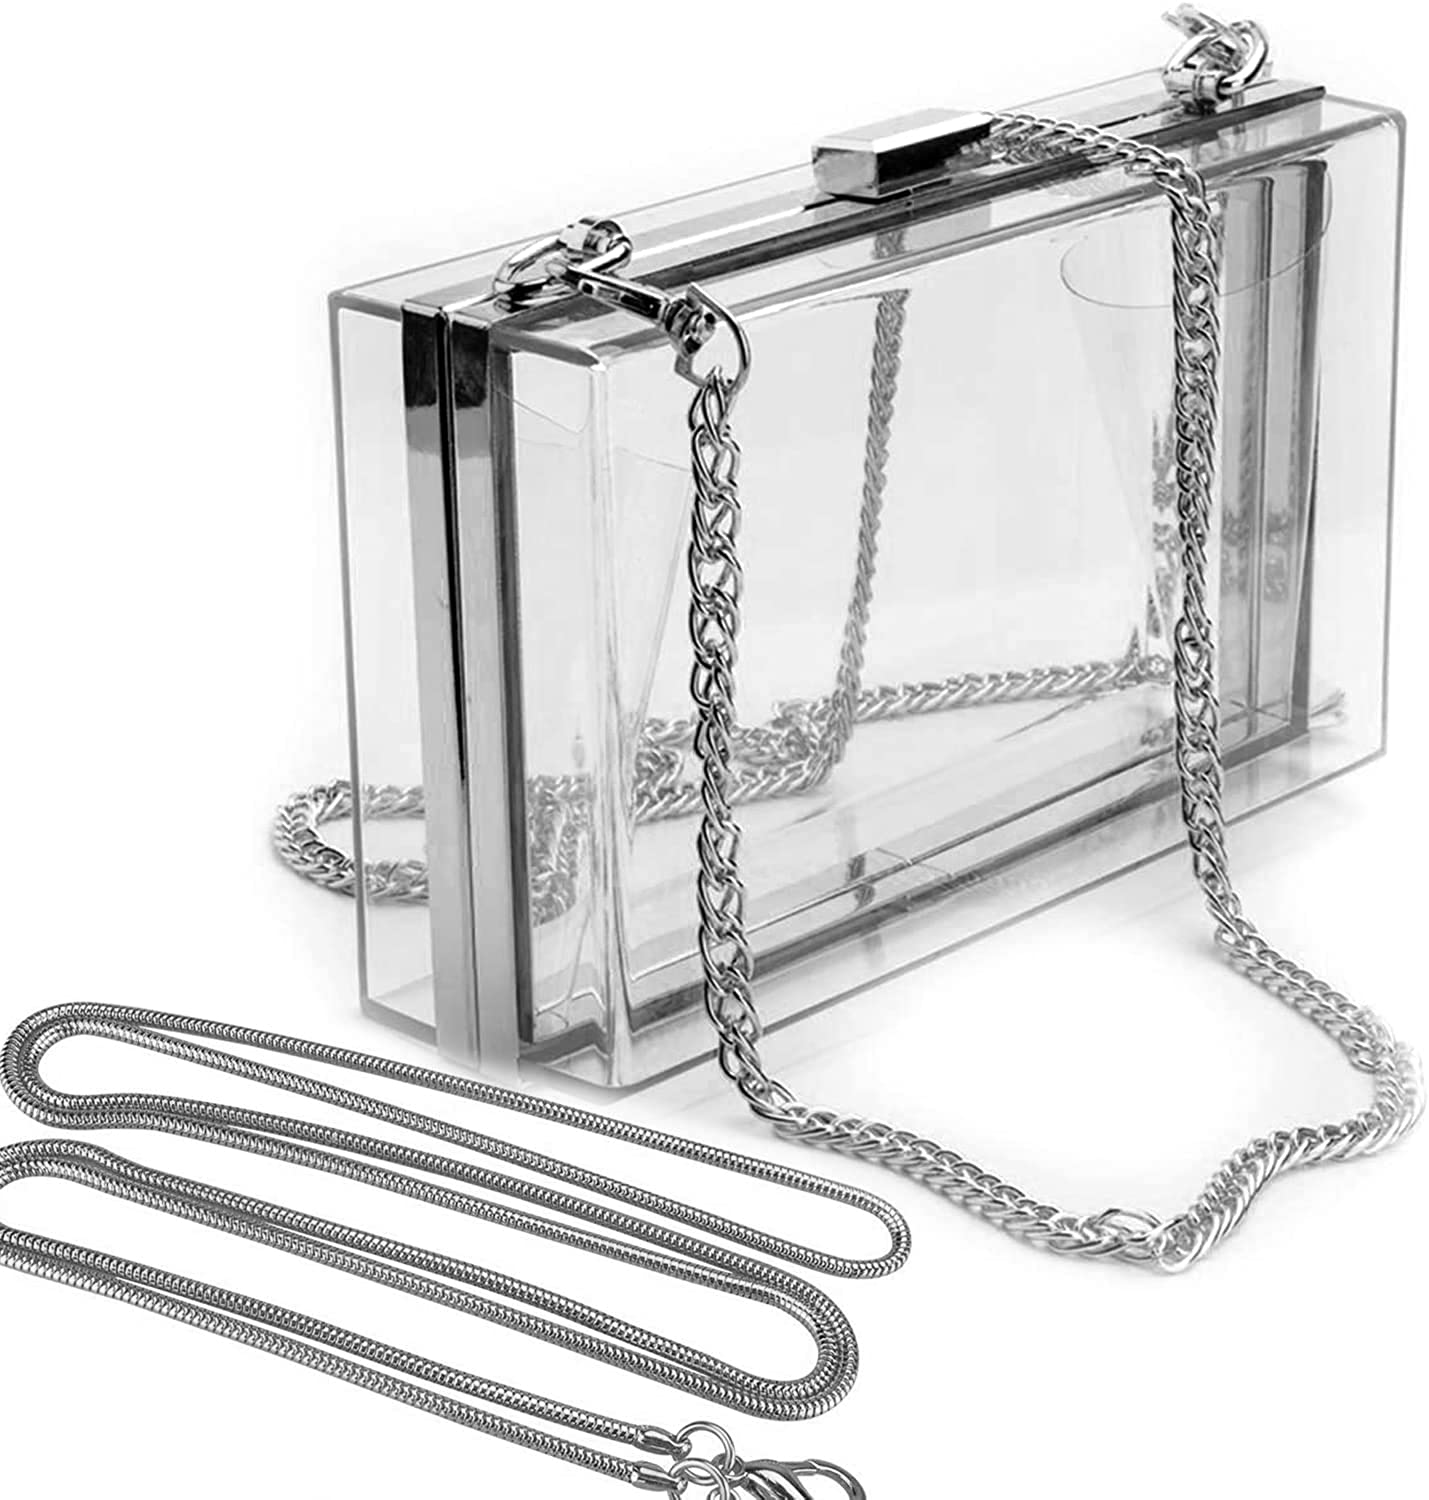 Mini Acrylic Transparent Handbag Square Box Clutch Crossbody Bag With Chain  Strap For Party, Dancing, Wedding